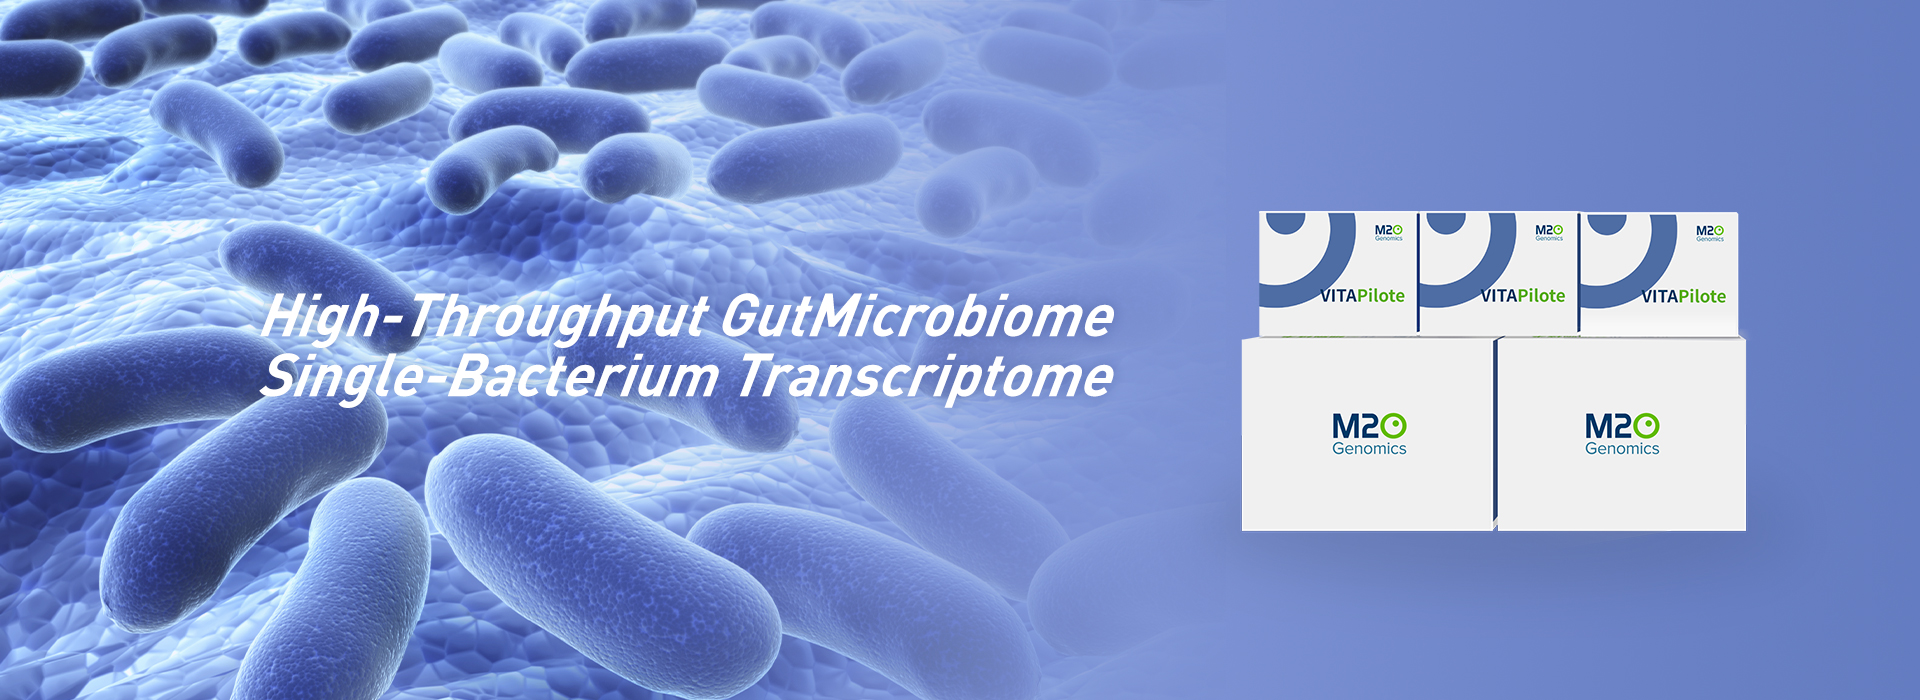 Single-Cell Transcriptome for Gut Microbiota Samples